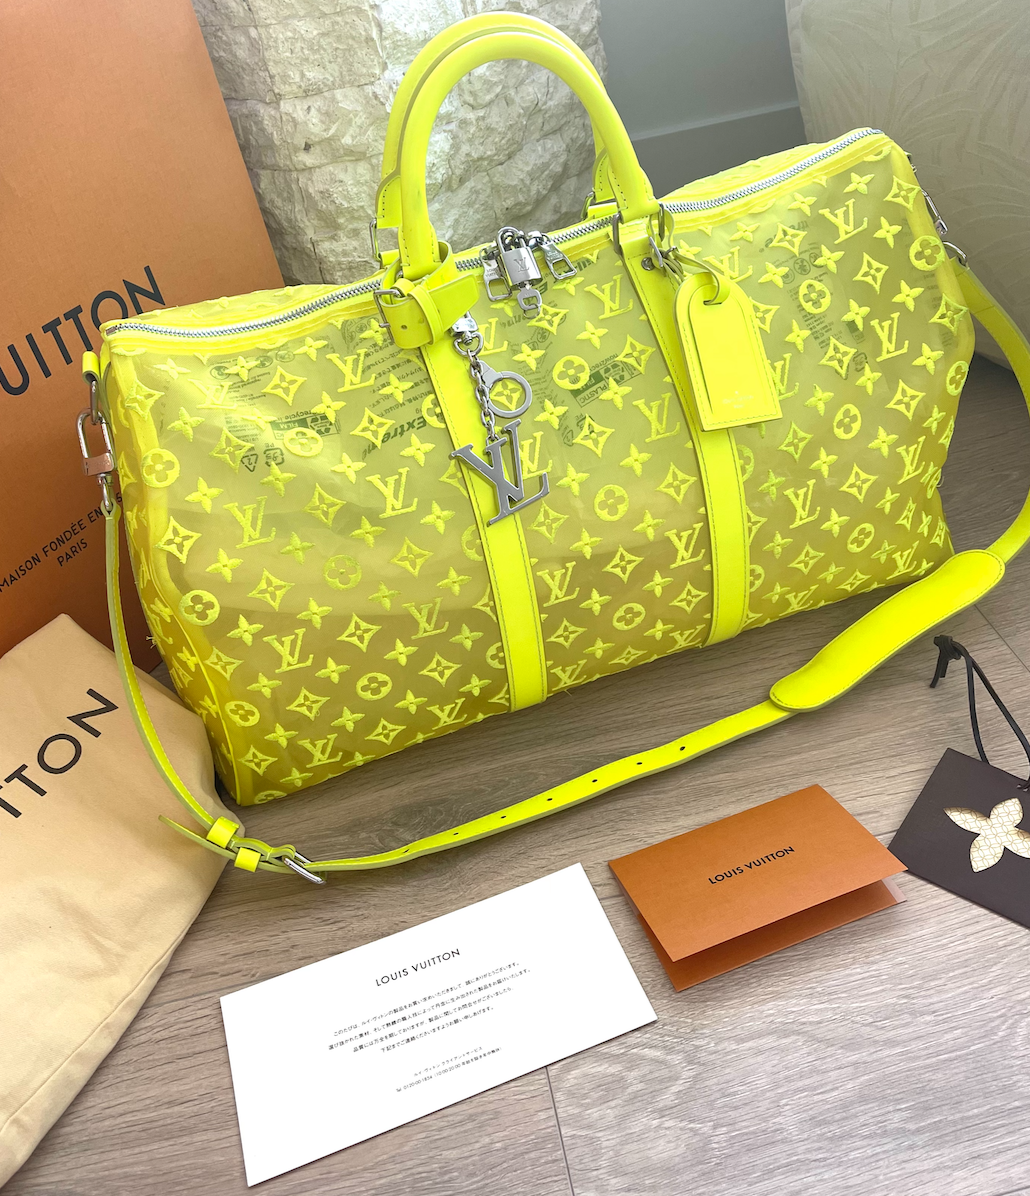 Blinding Bright LV!!! Louis Vuitton Duo Sling bag in Neon Yellow